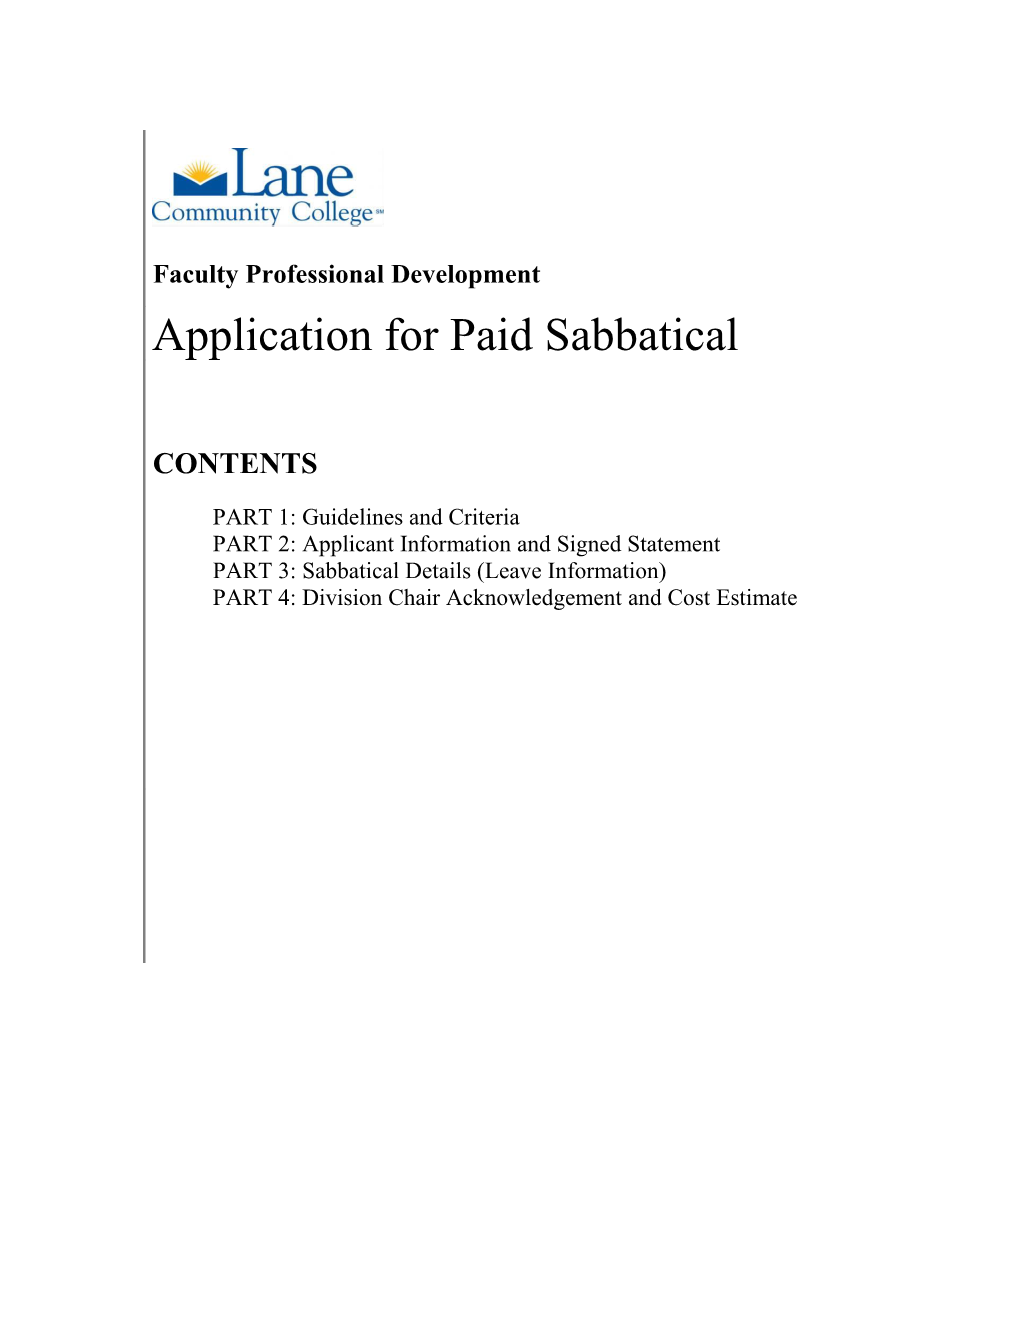 Application for Paid Sabbatical 20XX